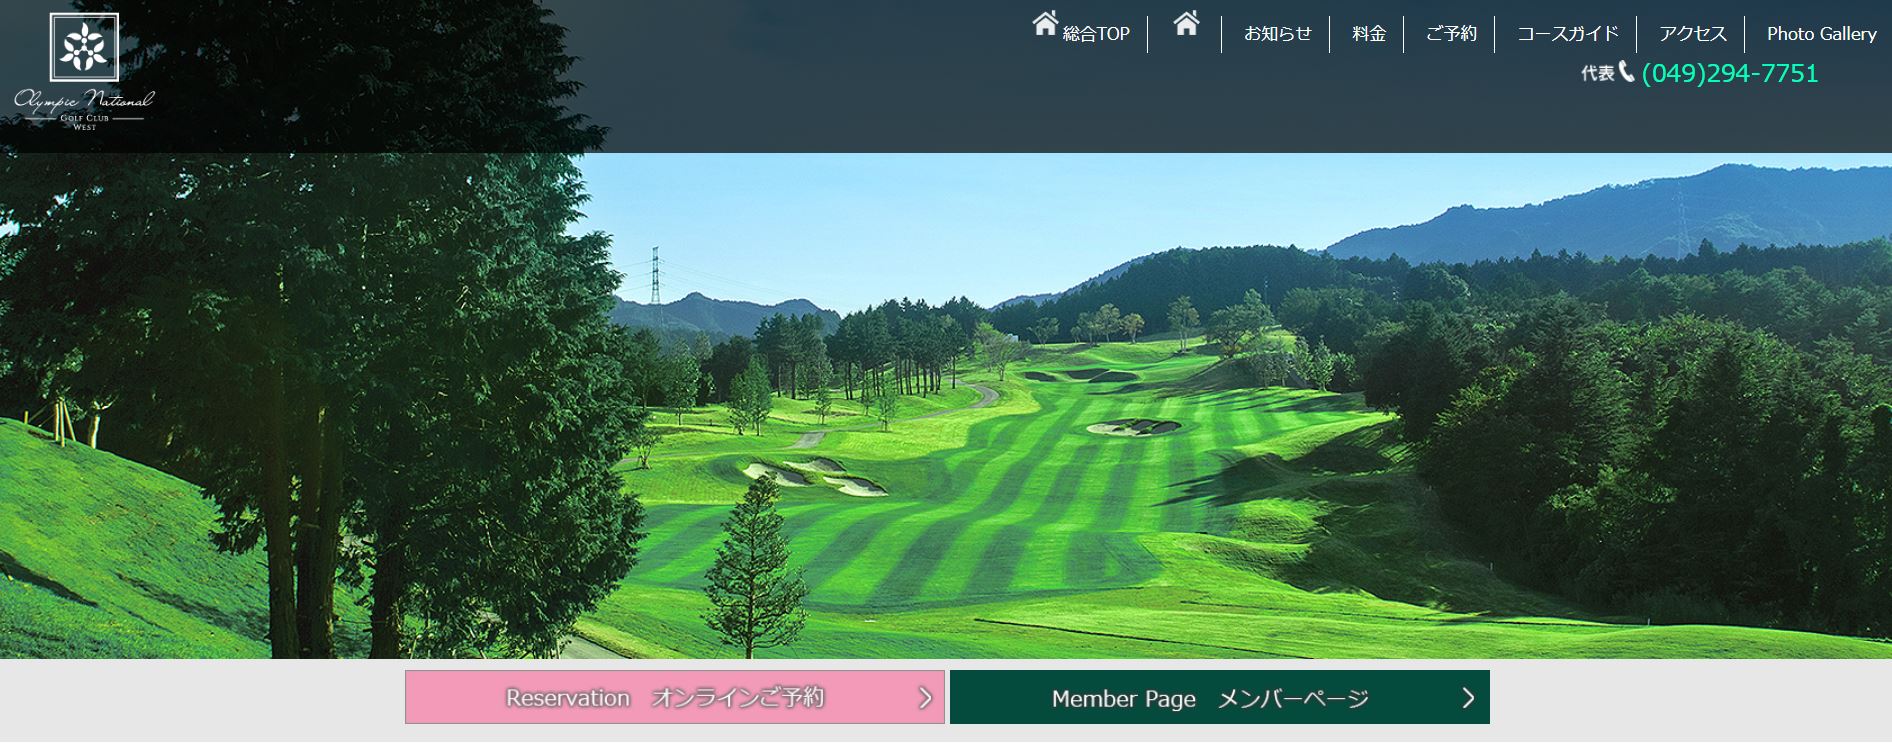 header-image_オリムピックナショナルゴルフクラブはどんなゴルフ場